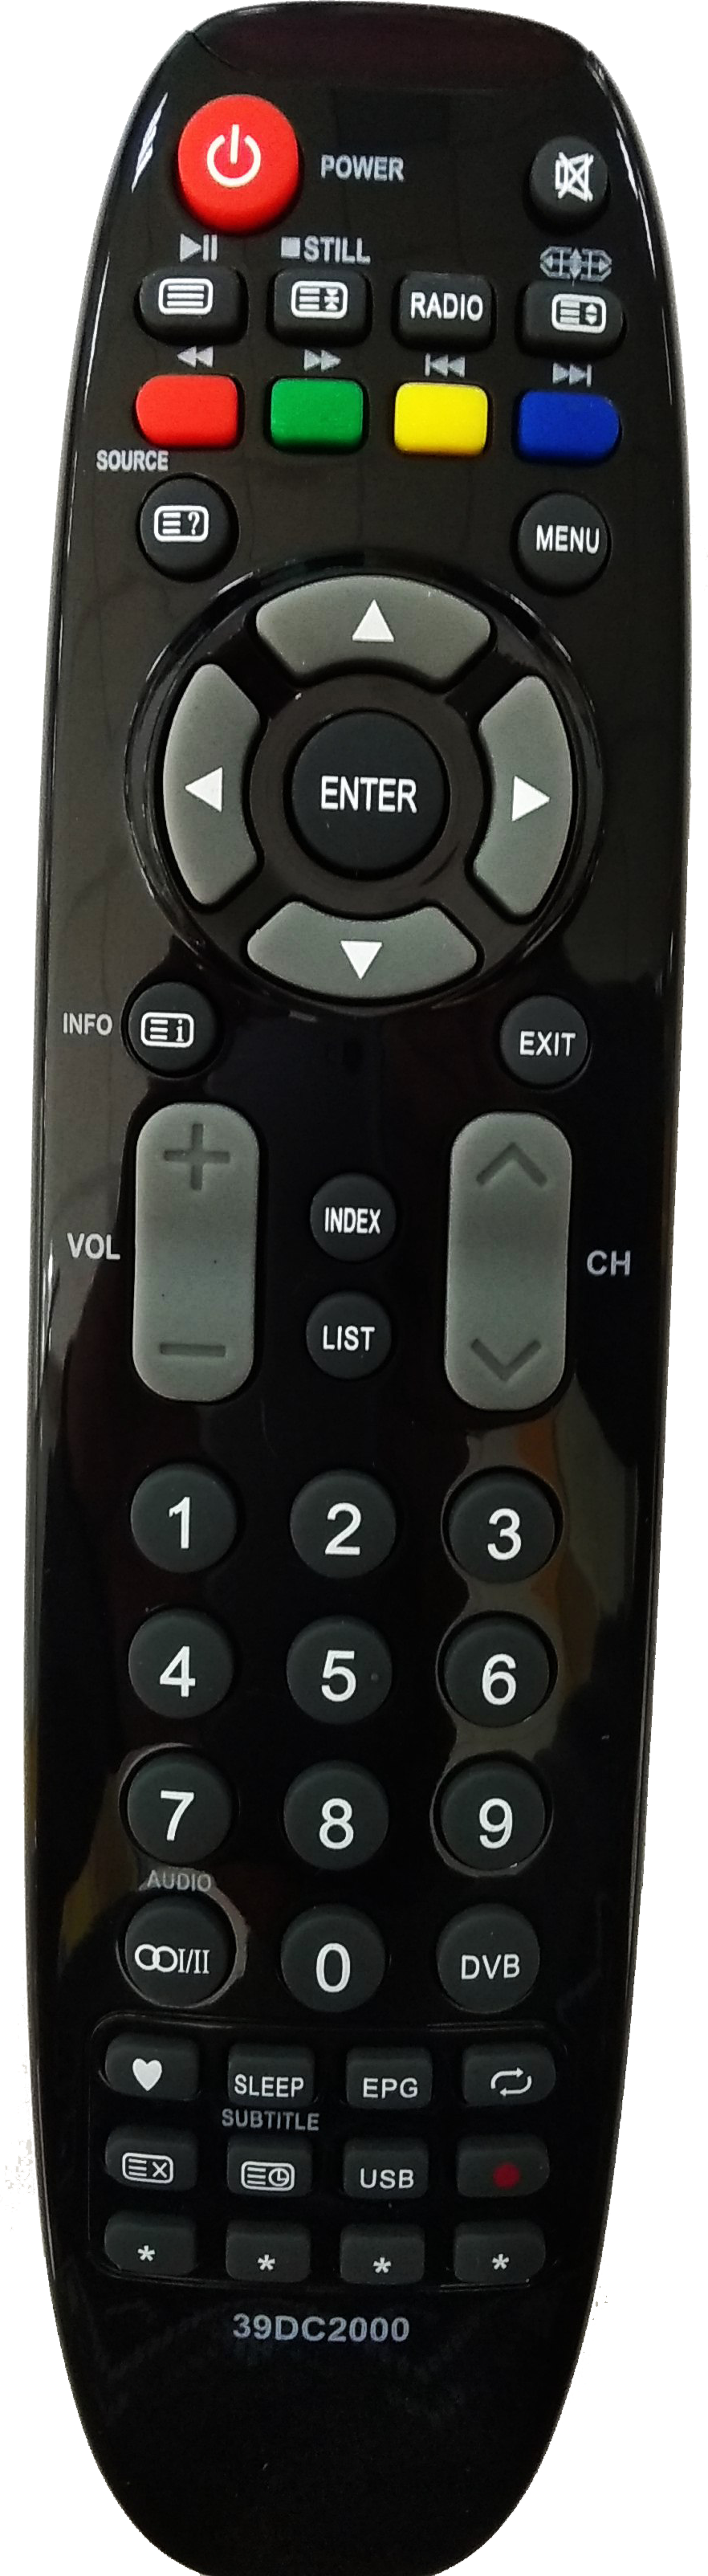 Dexp пульт телефон андроид